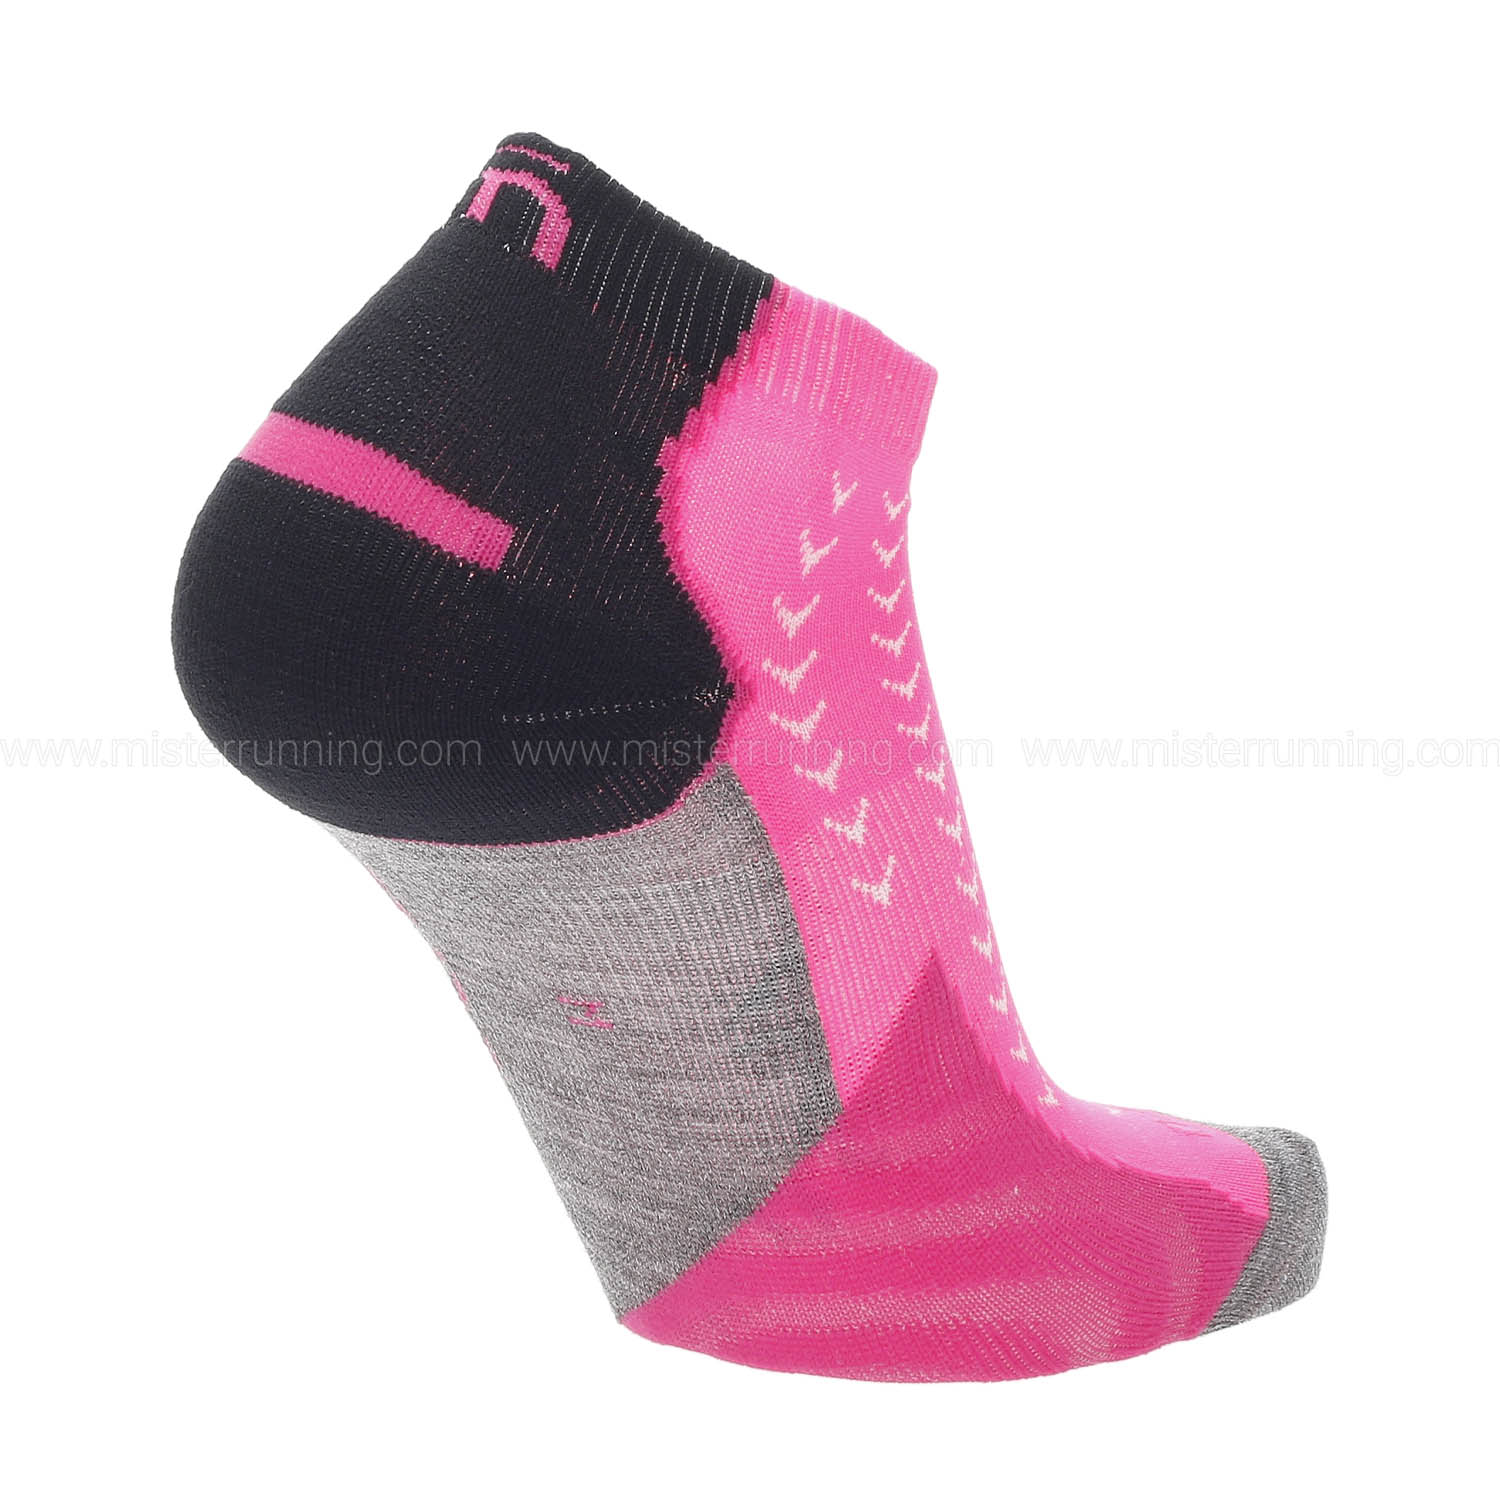 Mico Odor Zero Protech Light Weight Socks Woman - Fucsia Fluo/Nero